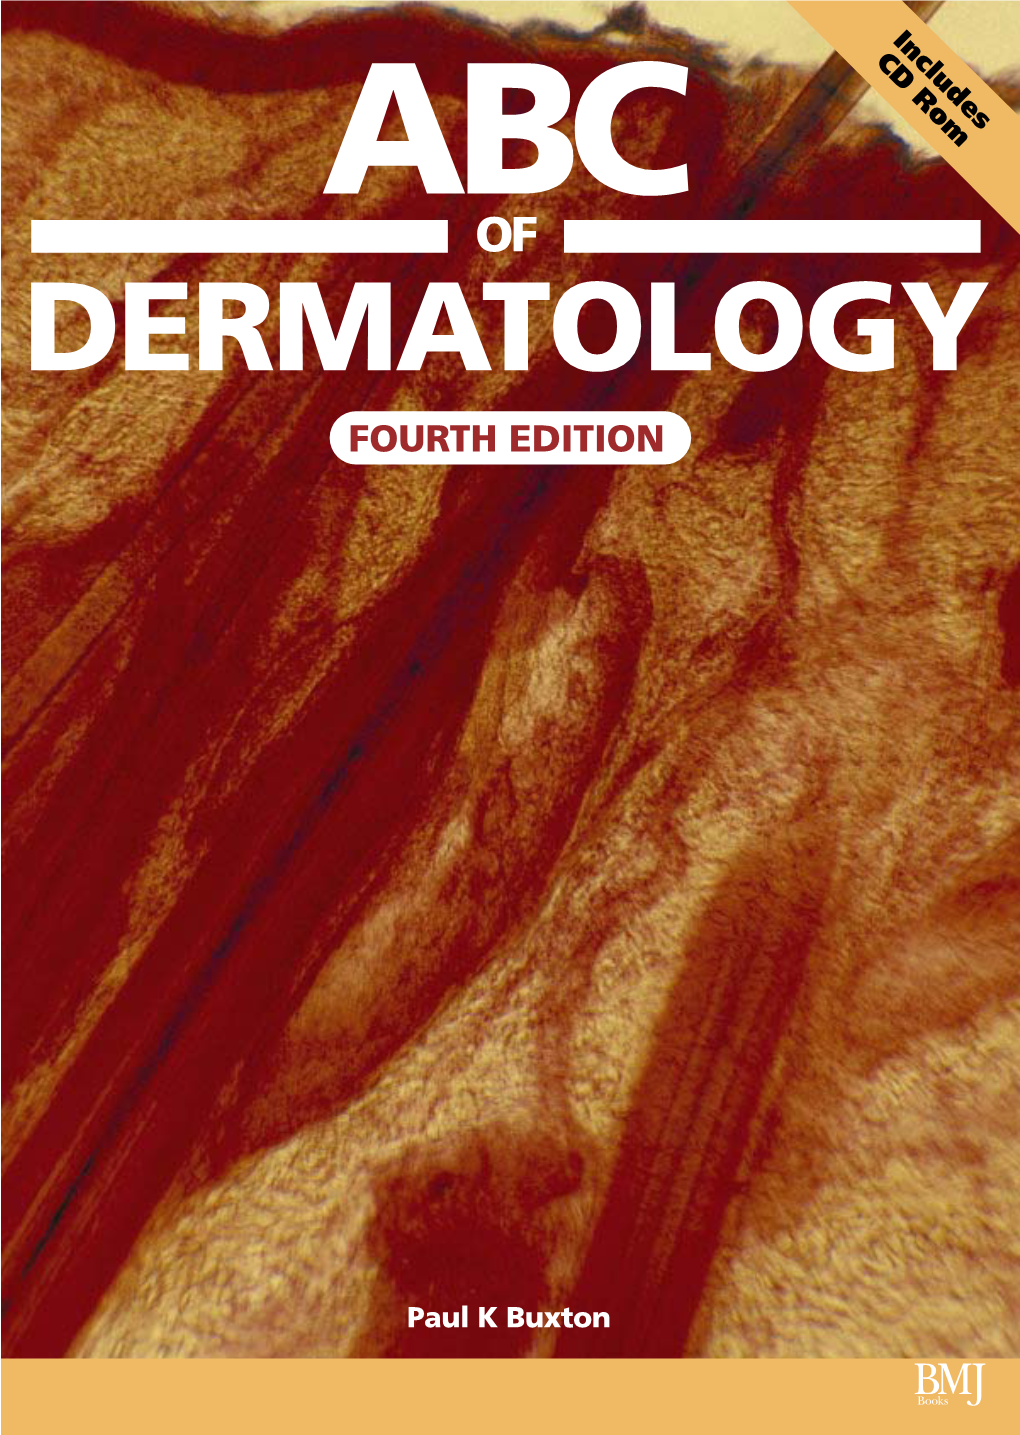 ABC of Dermatology Fourth Edition